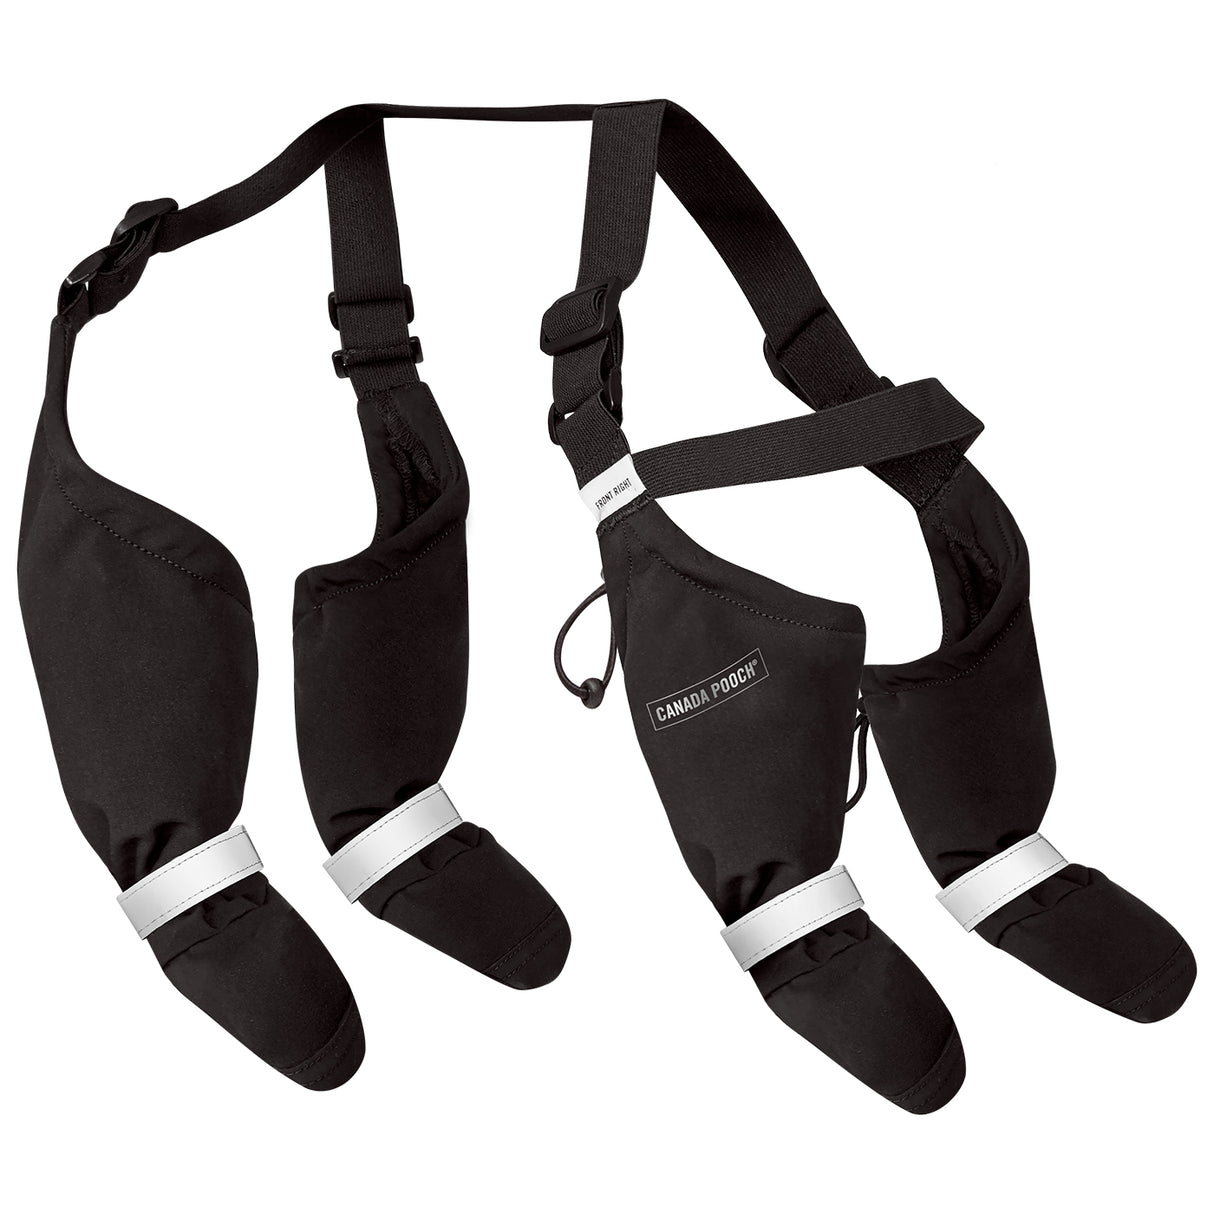 Canada Pooch Suspender Boots - Size 1 Short